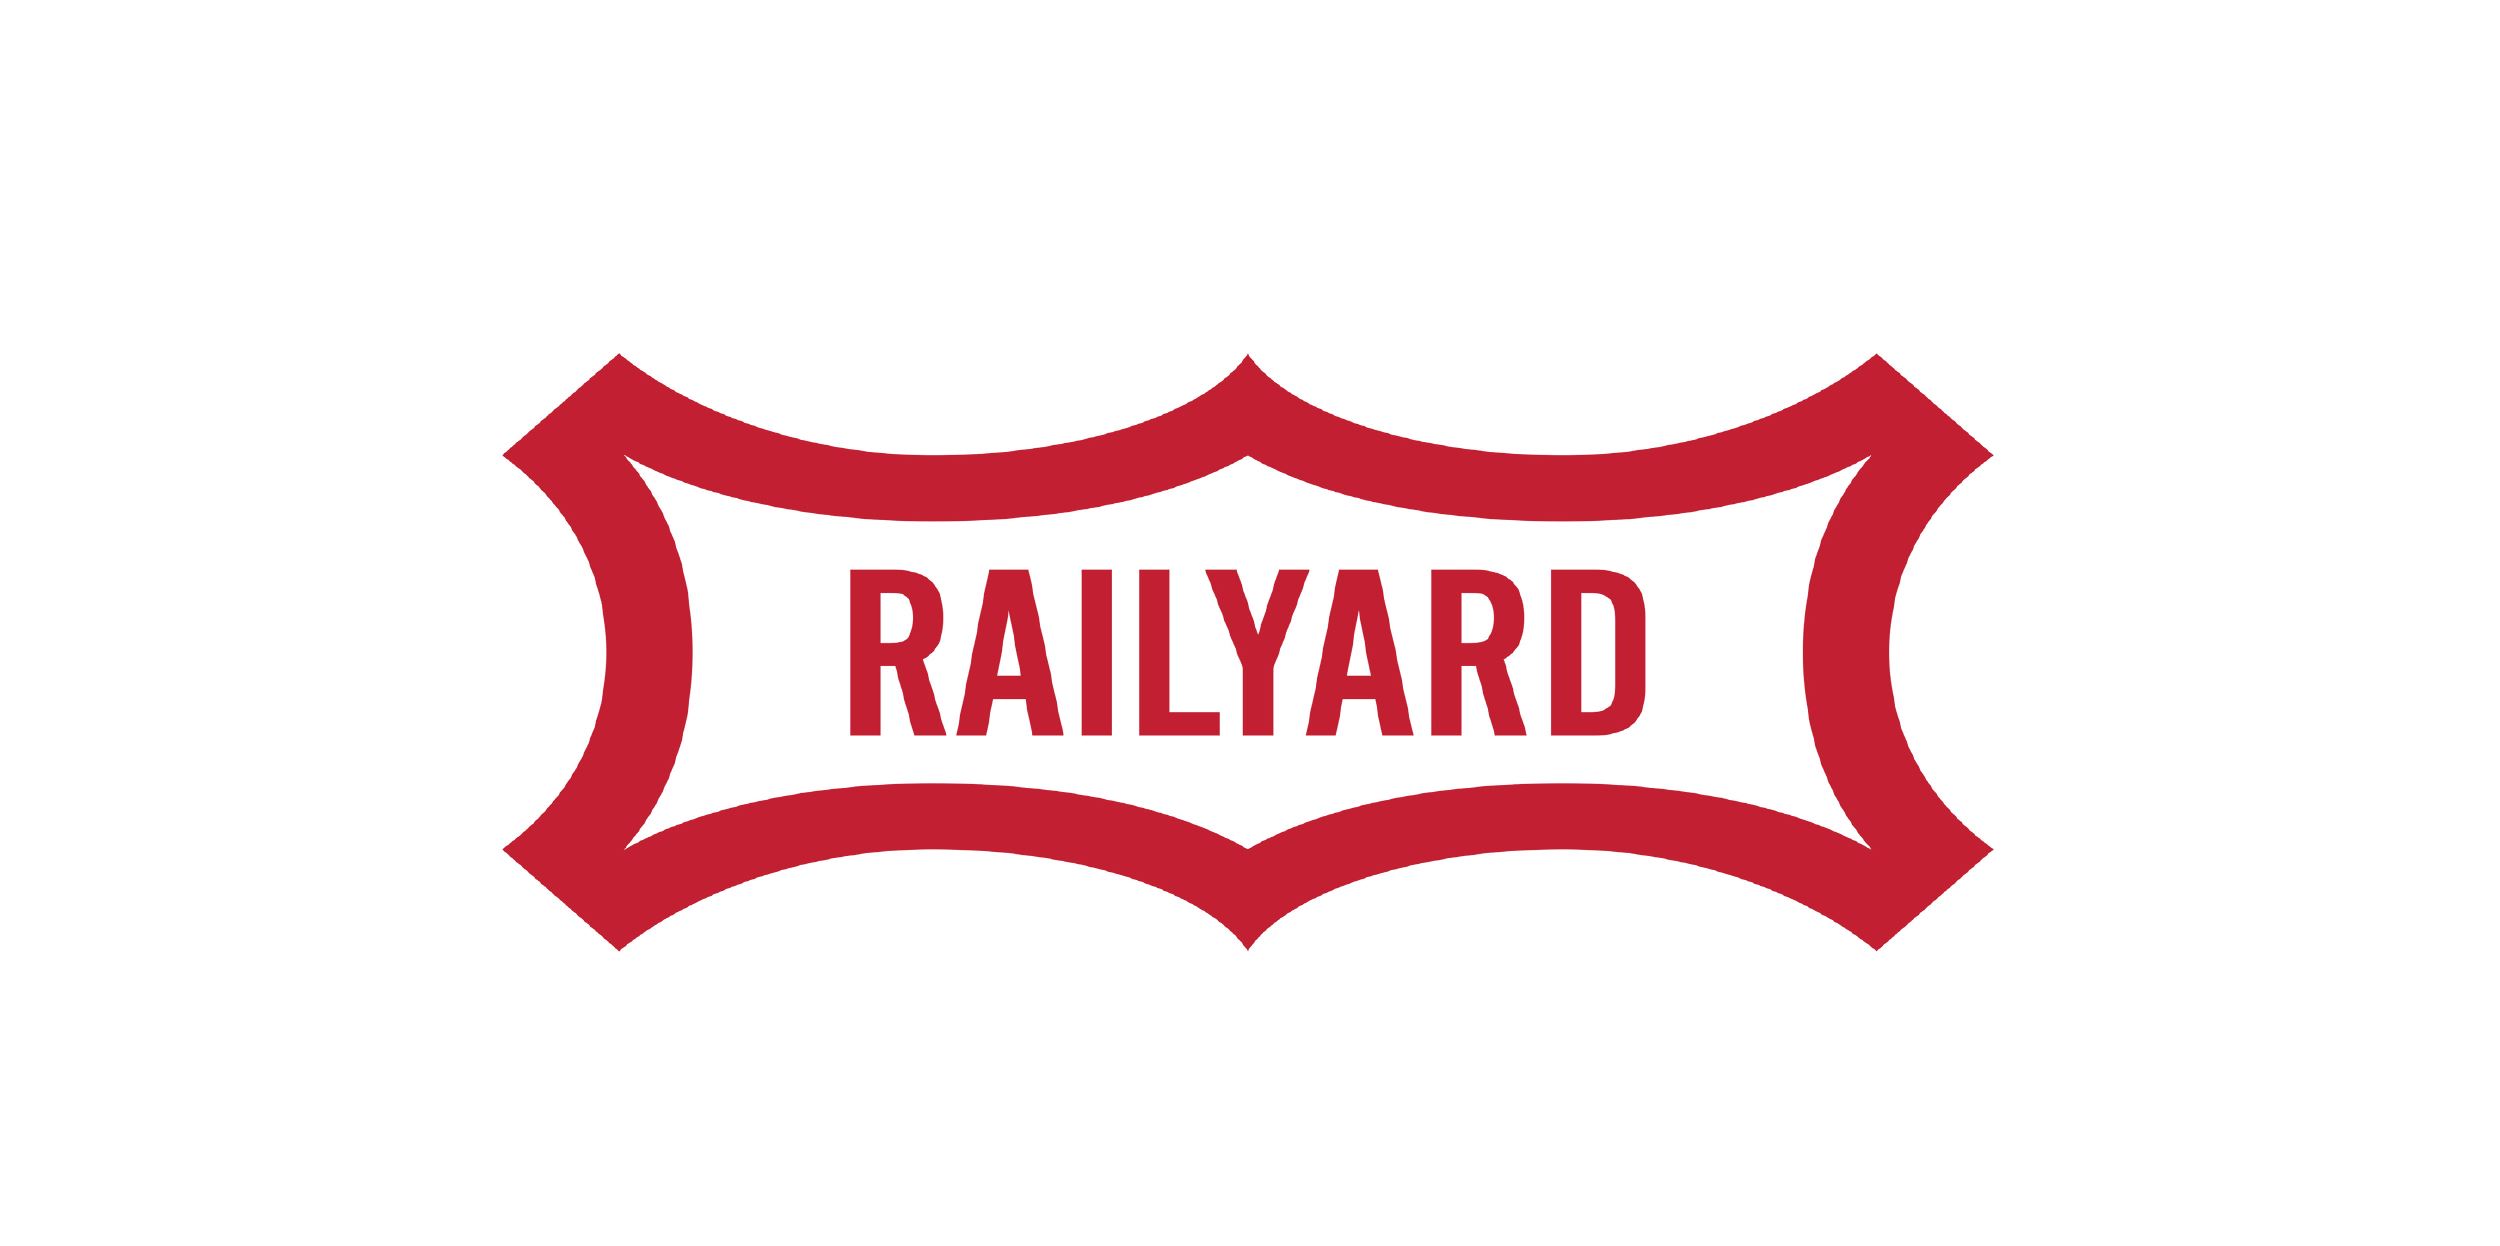 Railyard Logo 2 